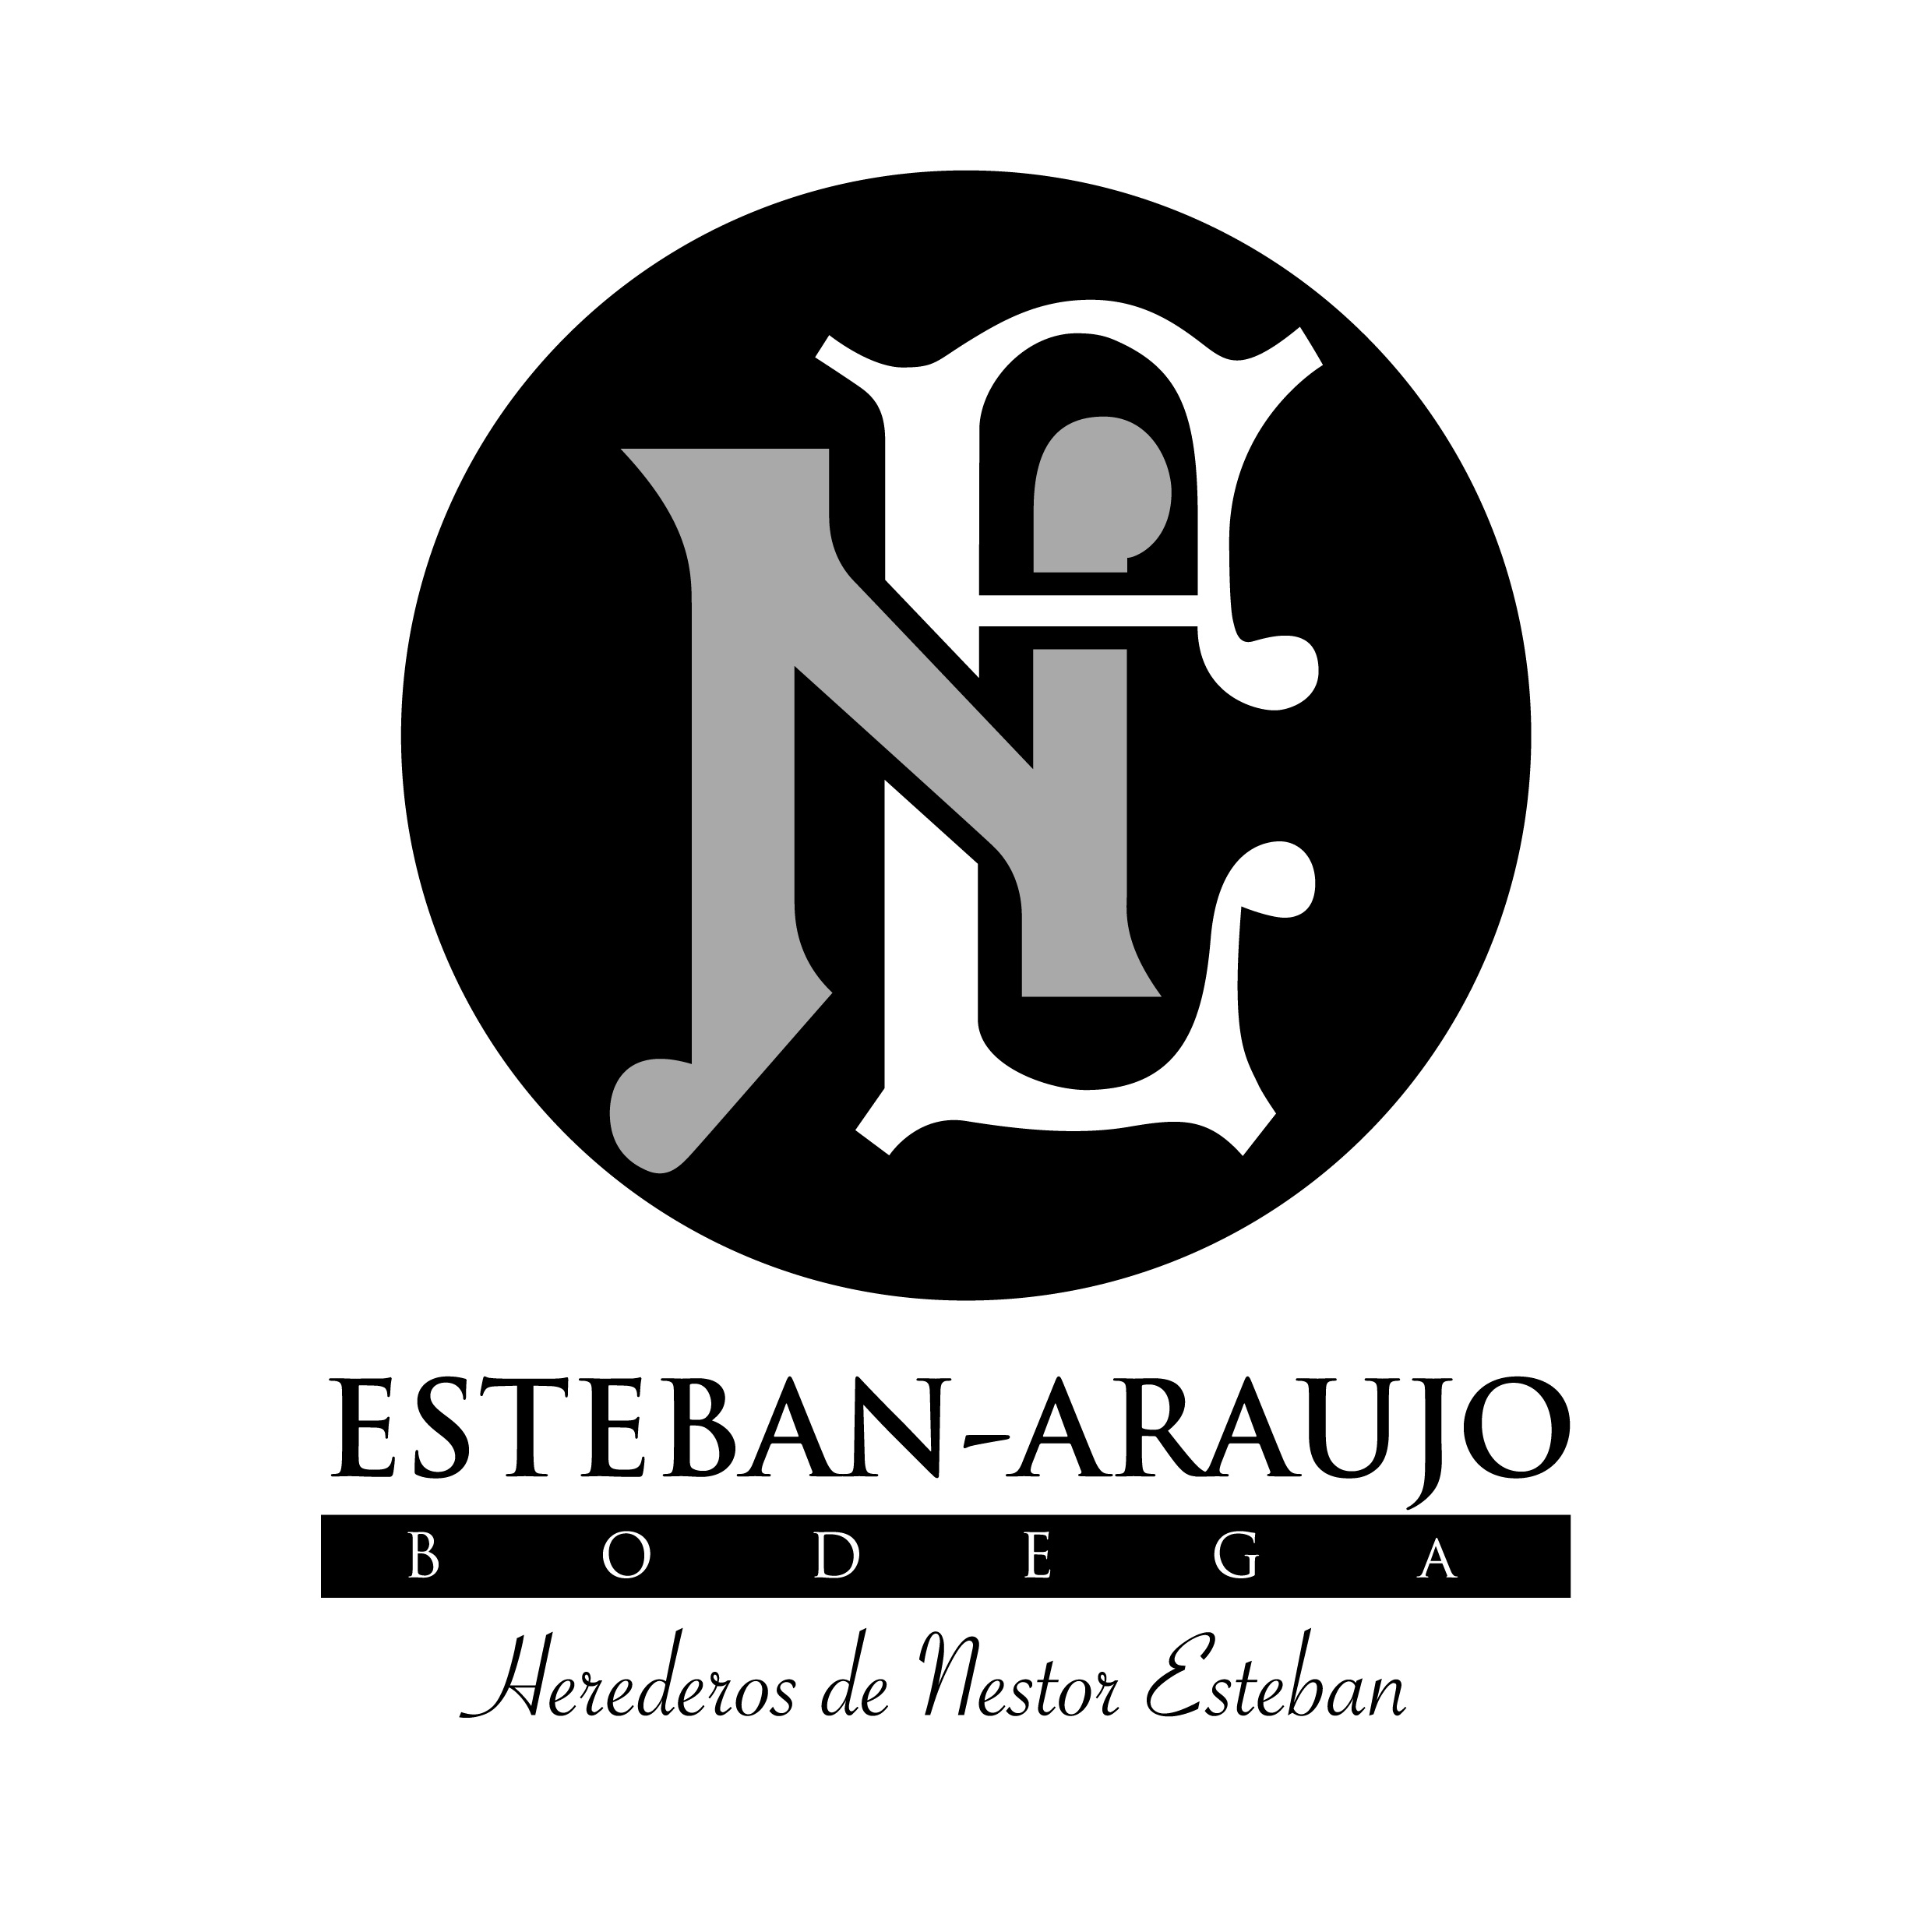 Logo from winery Bodega Esteban Araújo